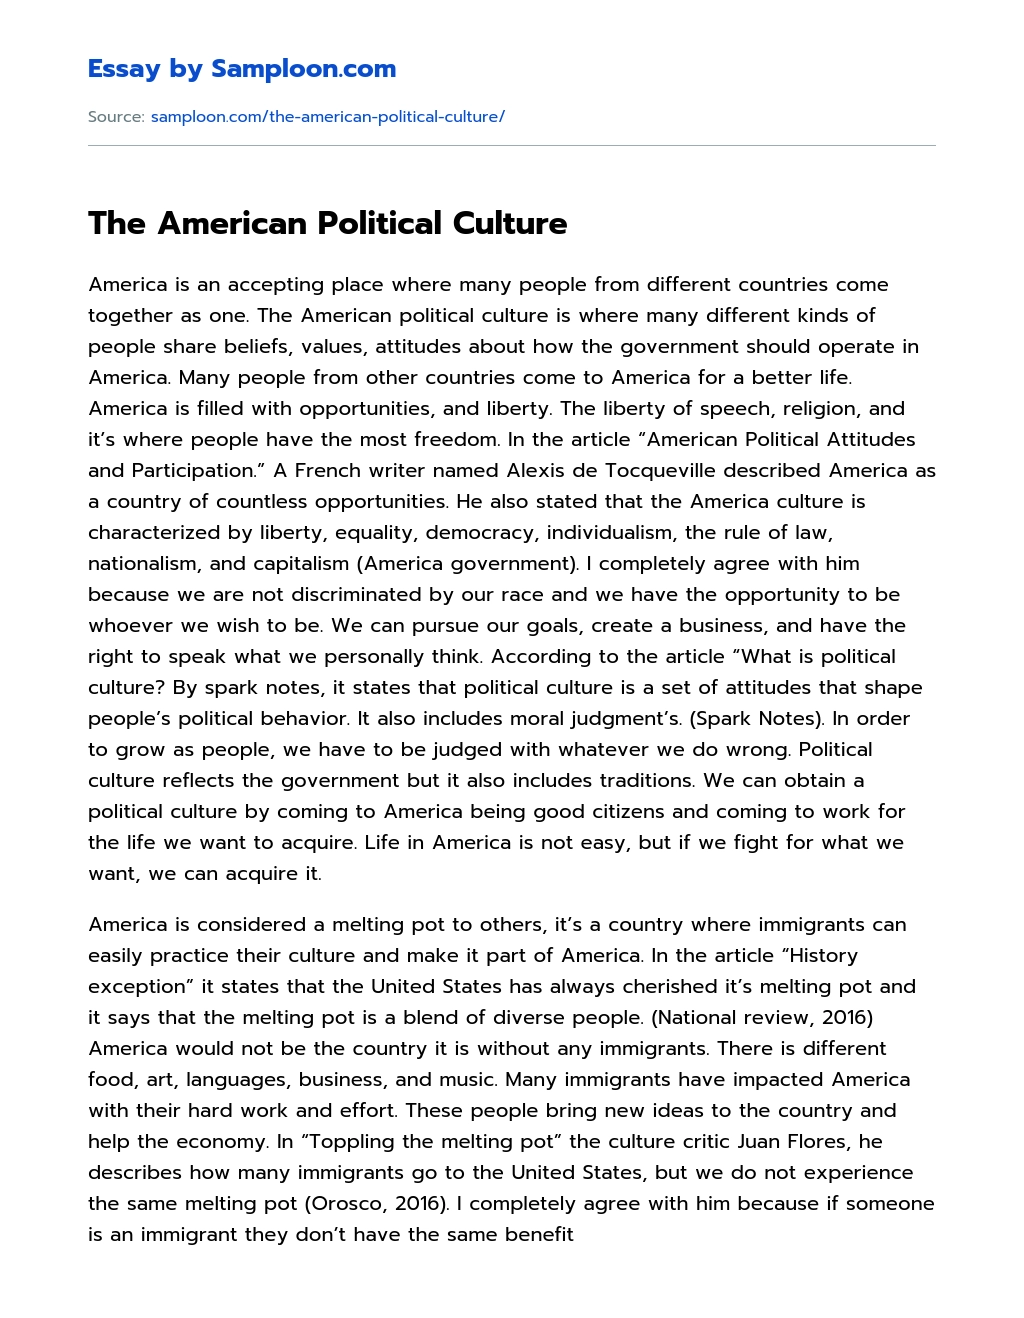 The American Political Culture essay